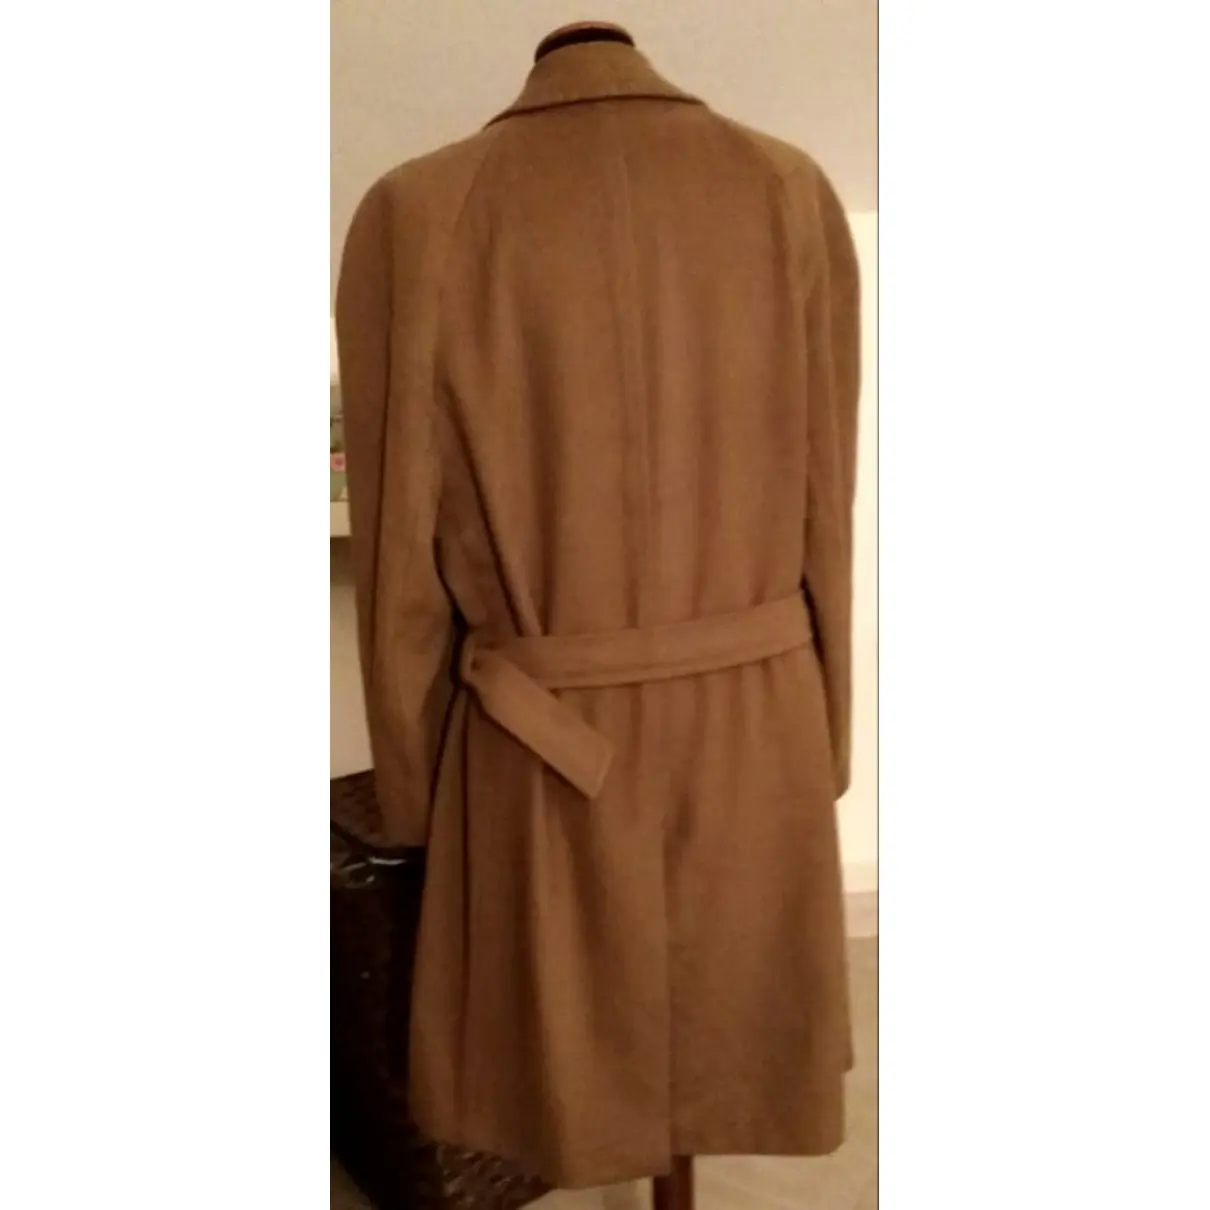 Cantarelli Cashmere coat for sale - Vintage